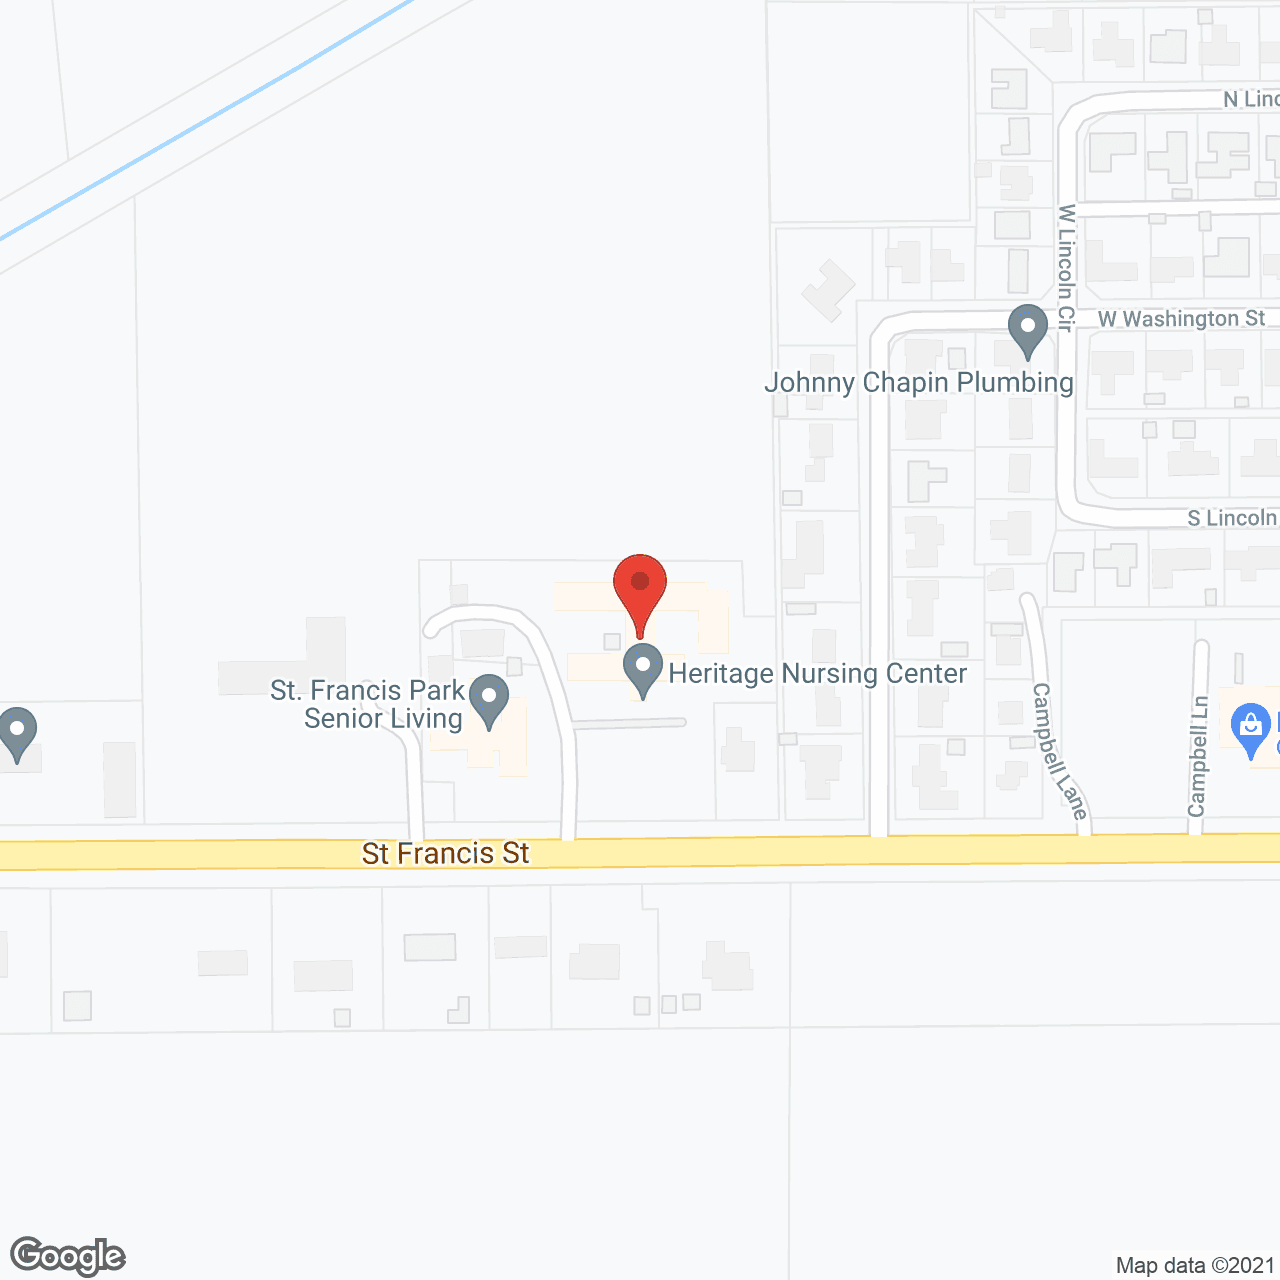 Heritage Nursing Center in google map